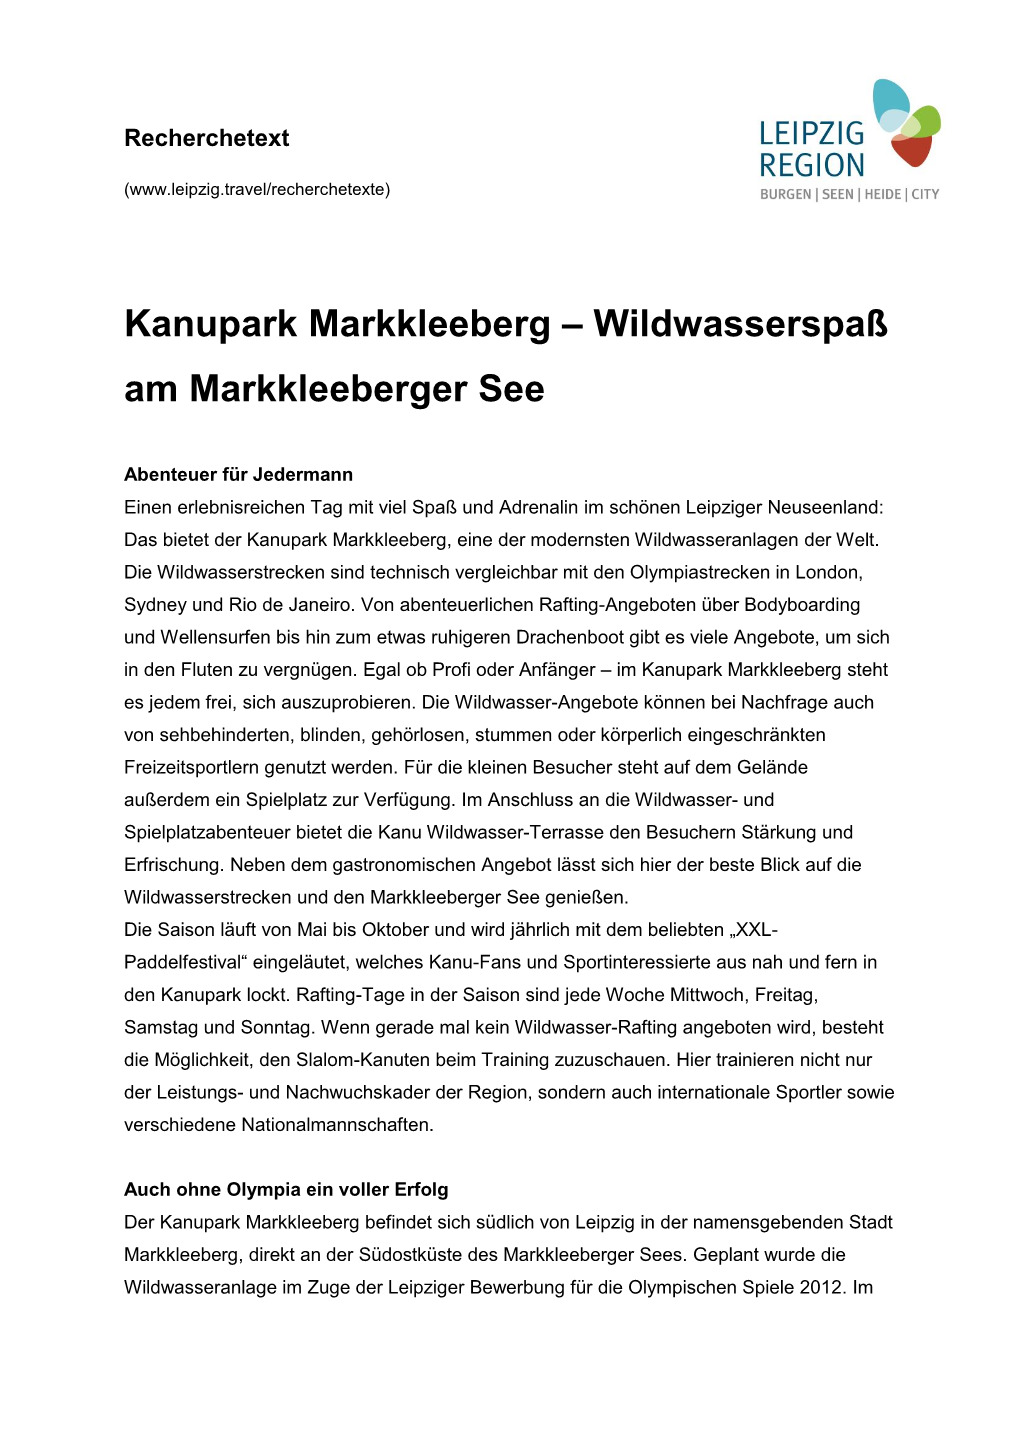 Kanupark Markkleeberg – Wildwasserspaß Am Markkleeberger See